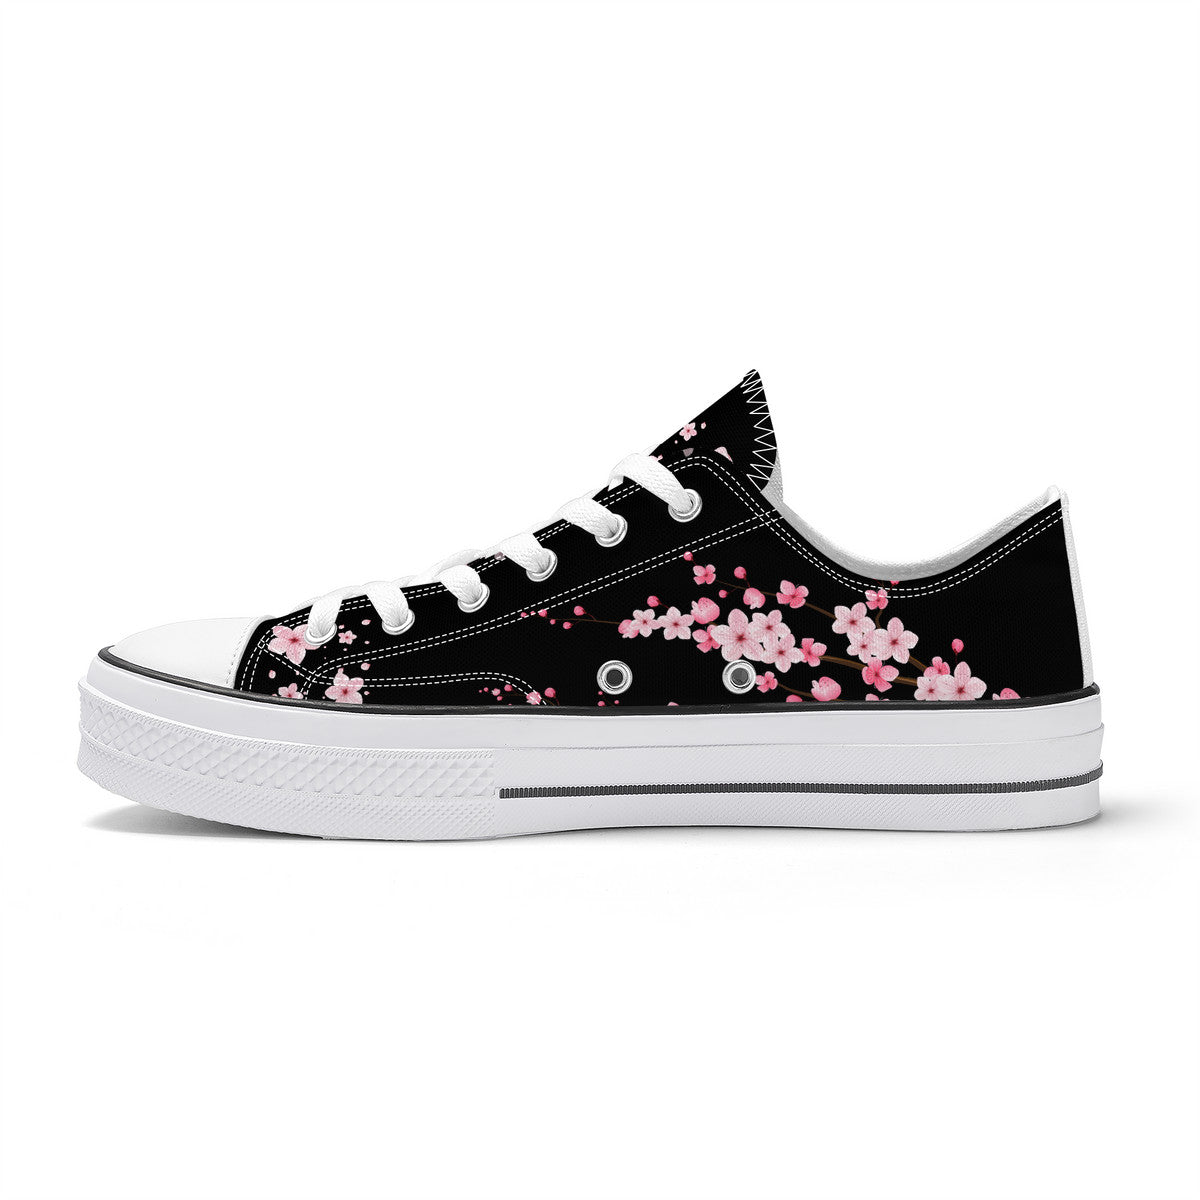 B&W Sakura Low Top Canvas Converse Style Shoes